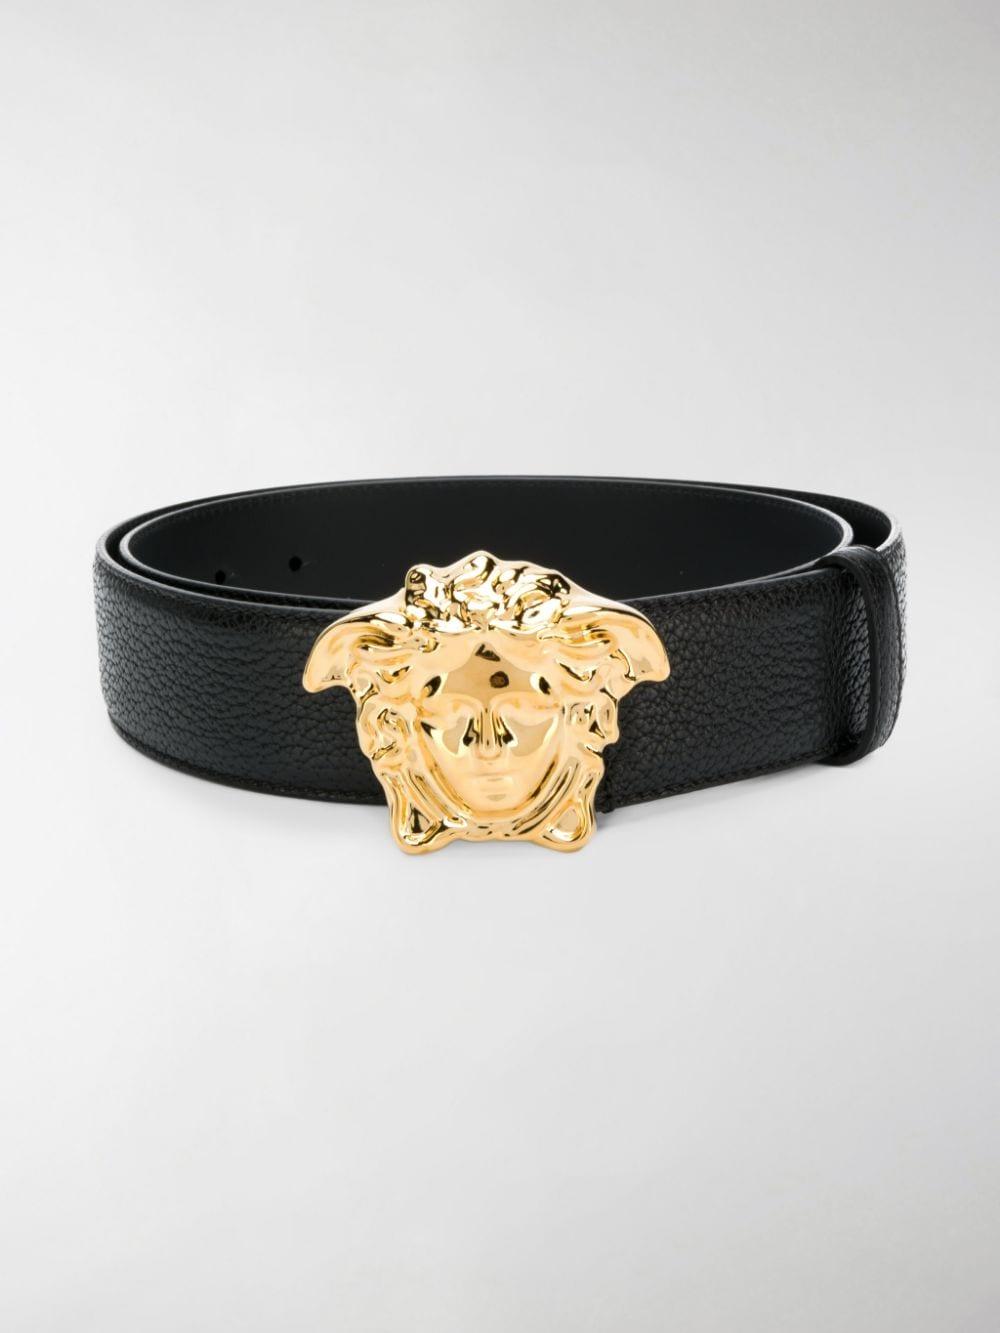 Versace Leather Medusa Buckle Belt in Black for Men - Lyst